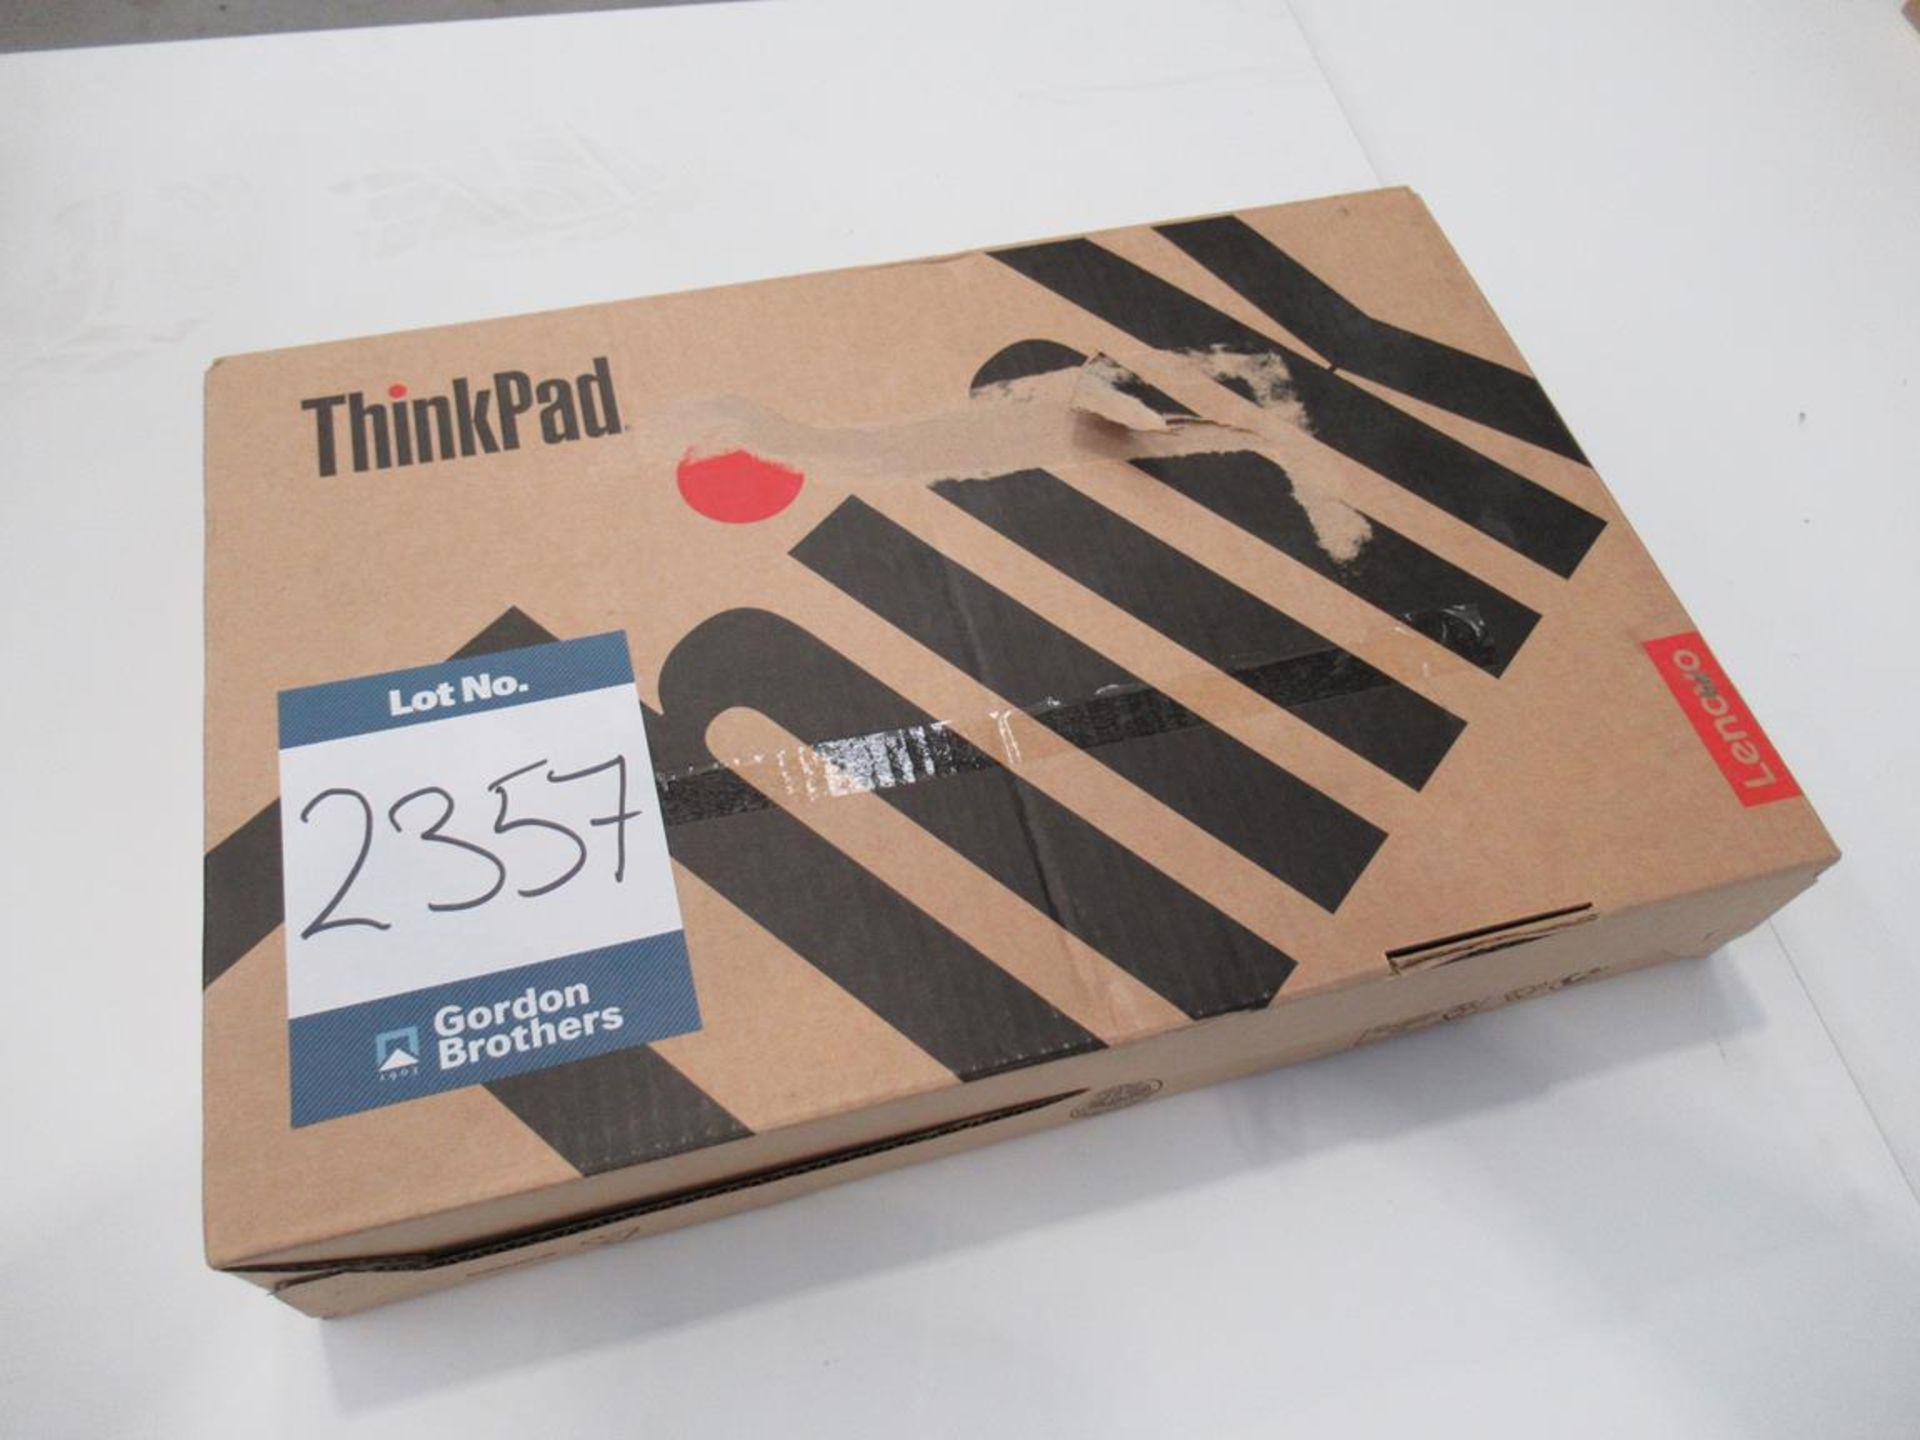 Thinkpad, T14s Gen 2 standard specification (boxed)